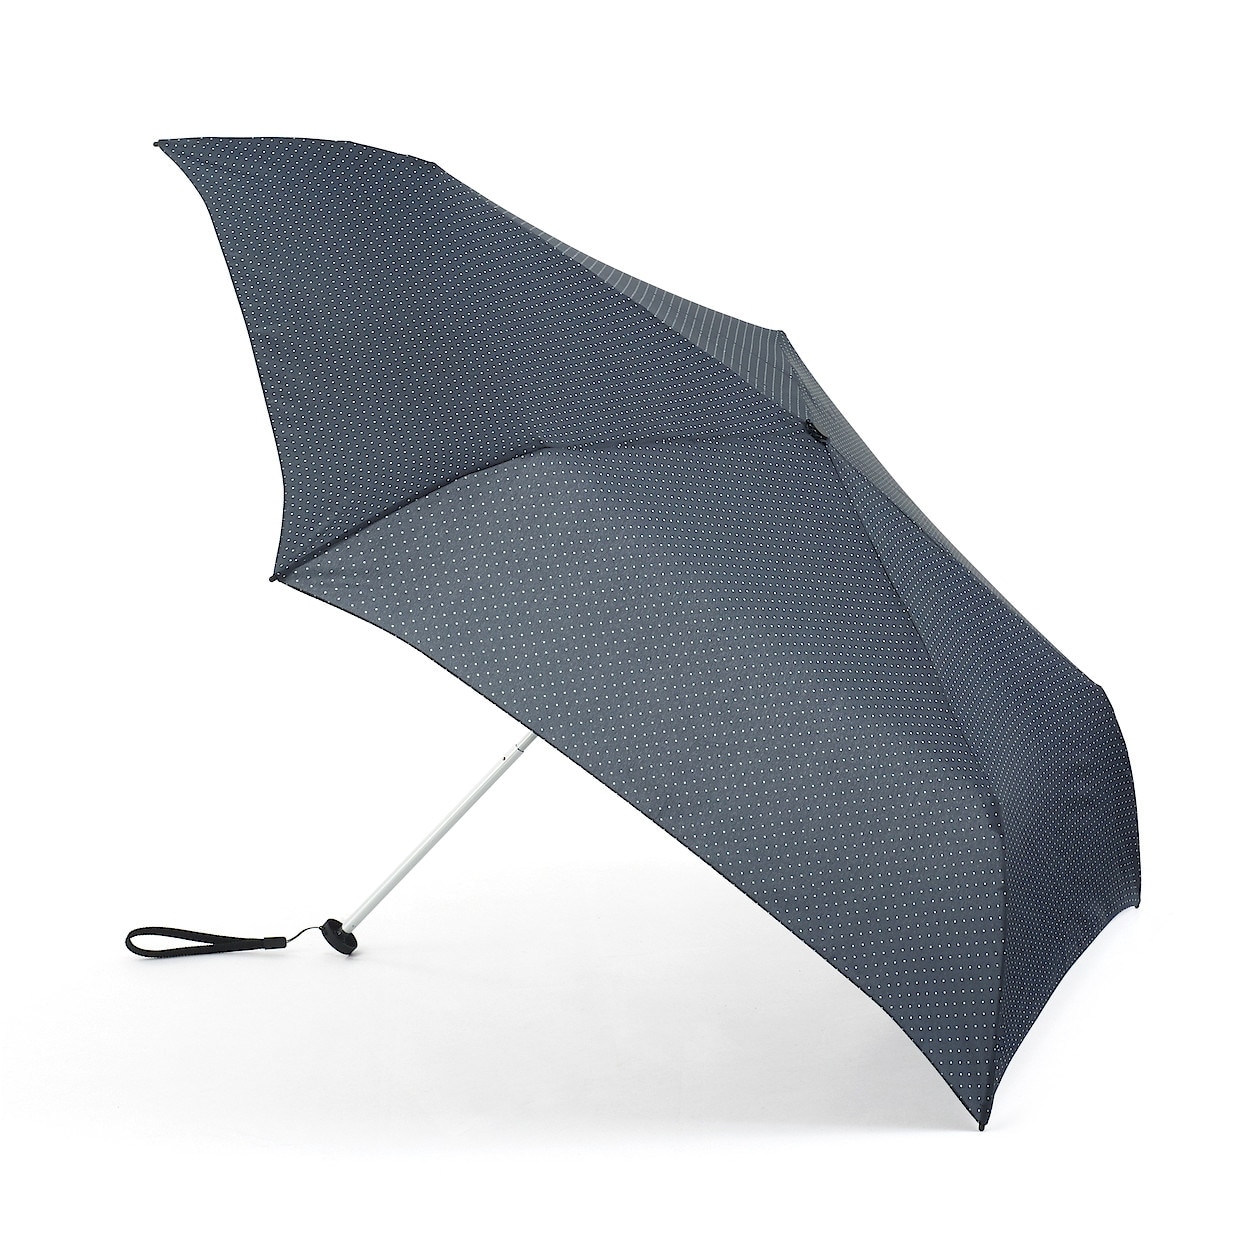 NAVY PATTERN(경량 · 양산 겸용 접이식 우산)